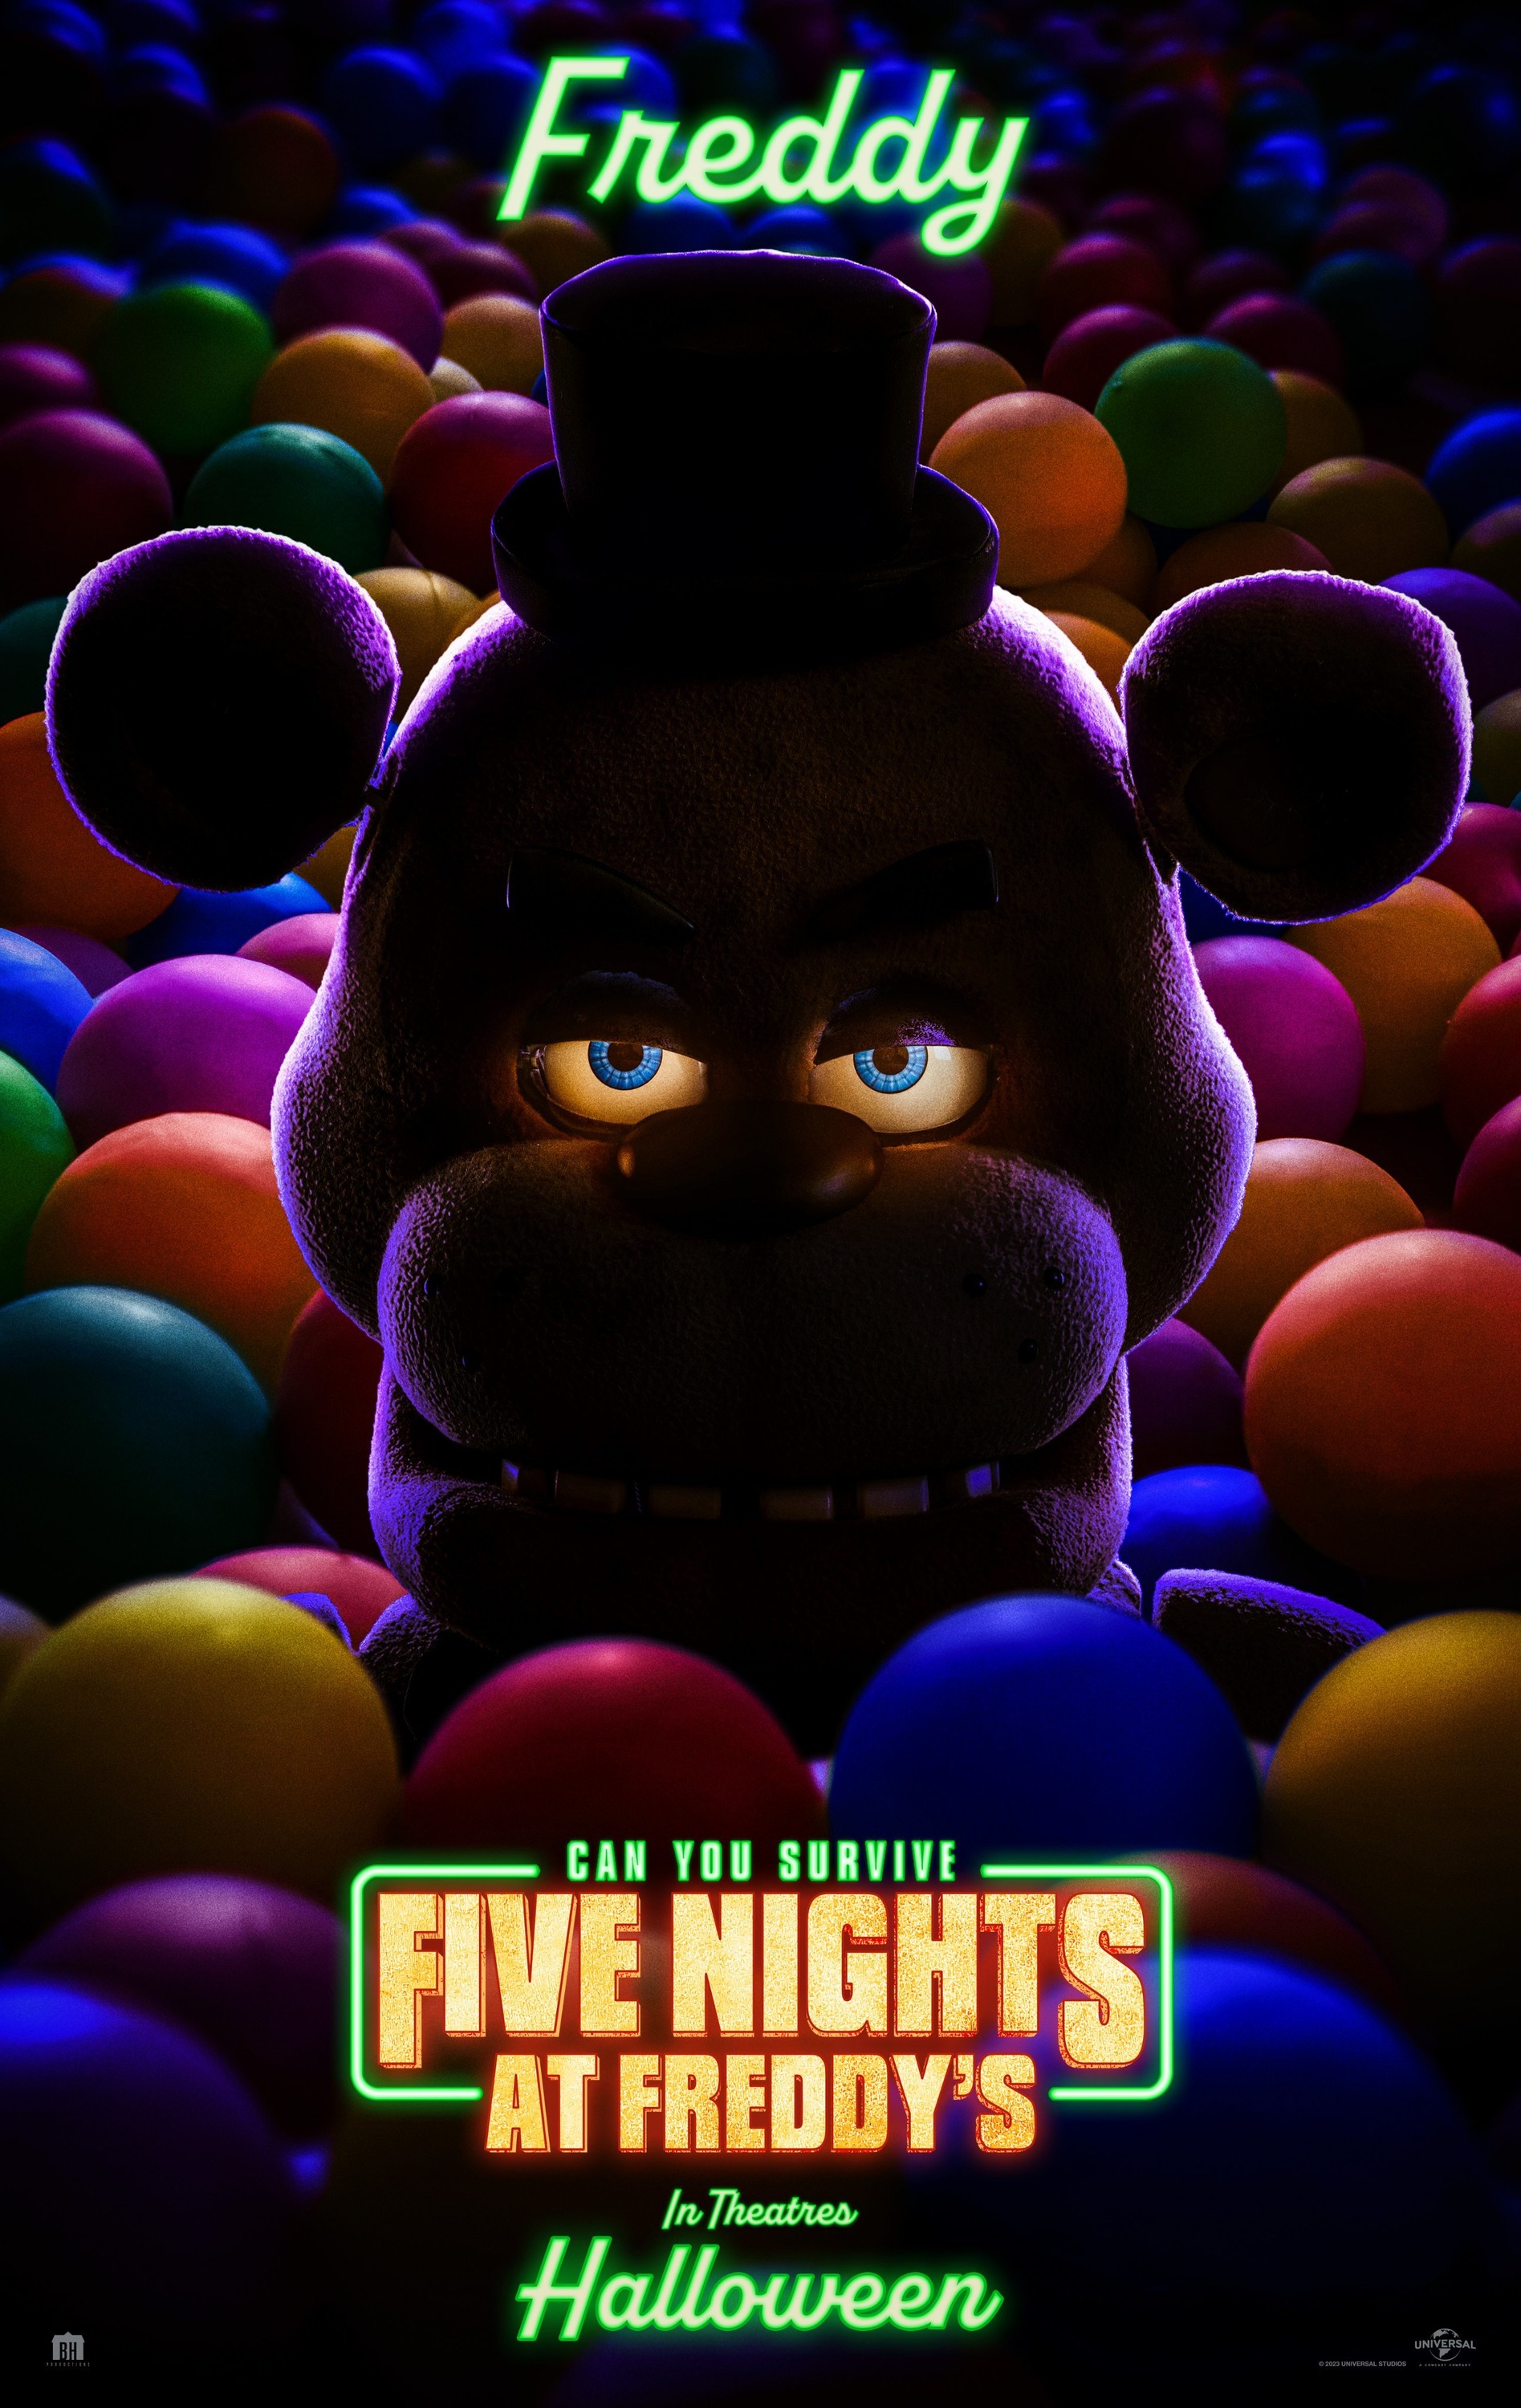 FNaF Movie Freddy poster 2 (High Resolution) by JakAndDaxter01 on DeviantArt